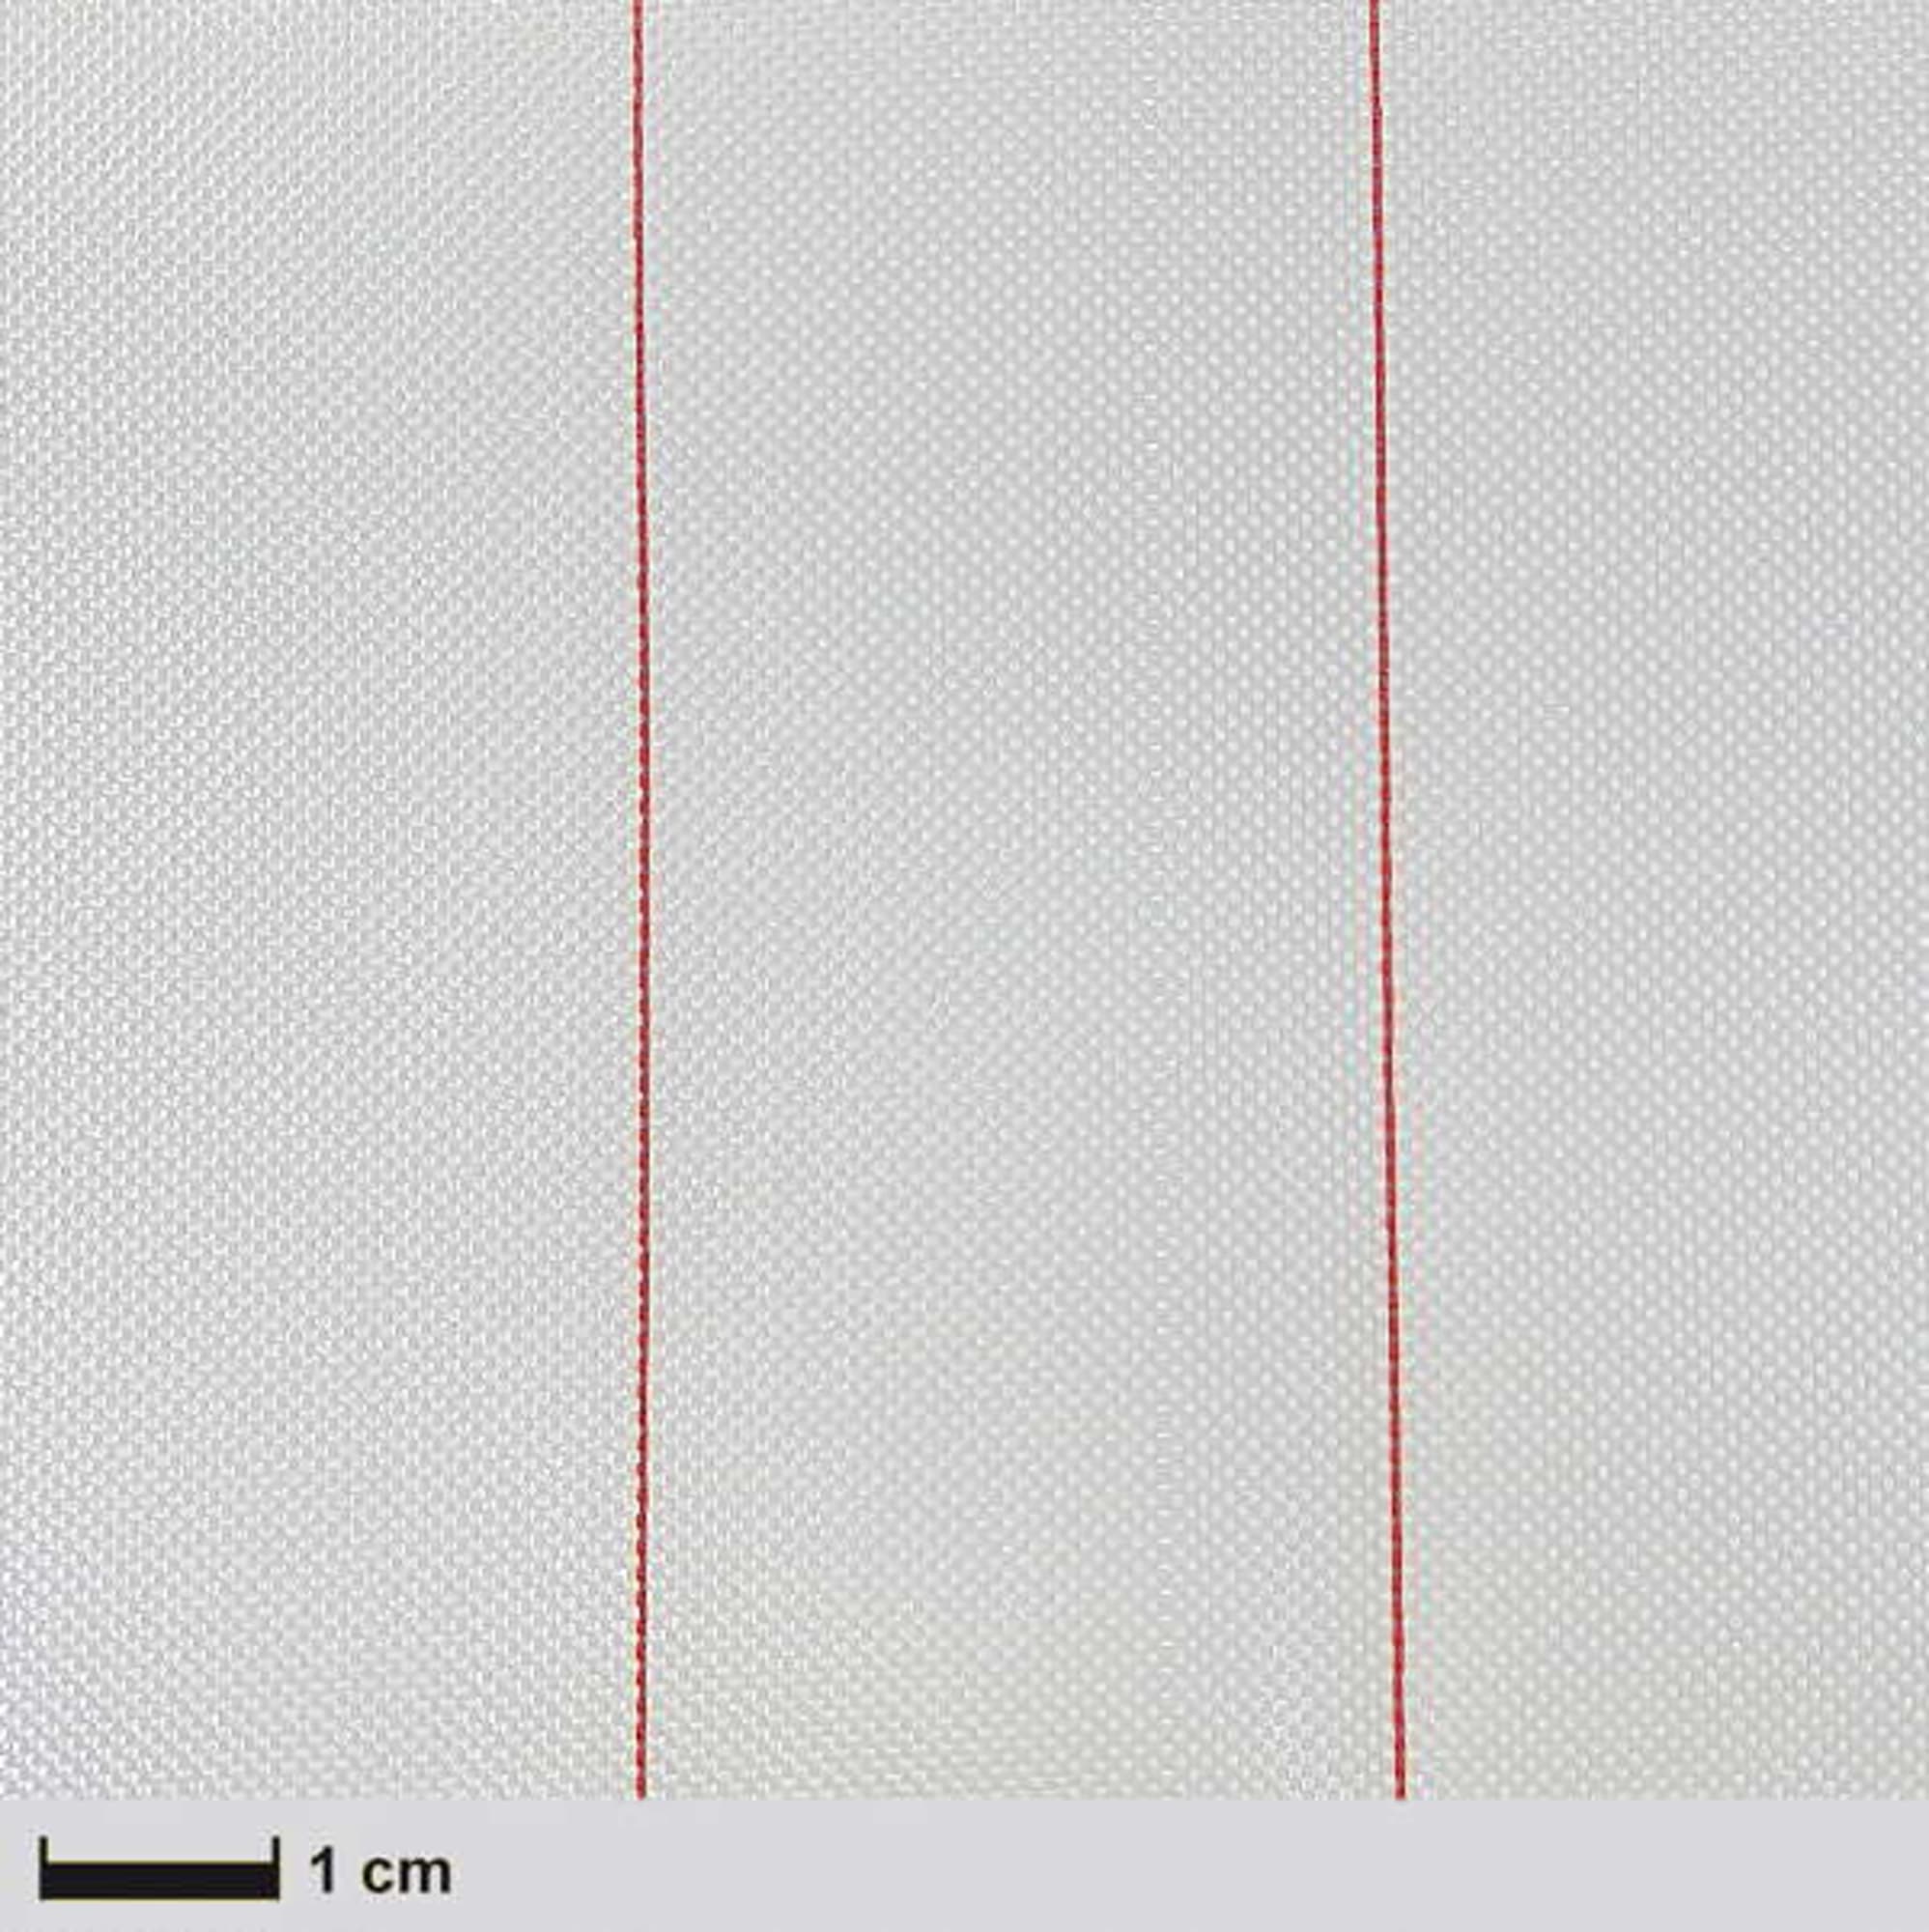 Peel ply 95 g/m² (plain weave) 100 cm